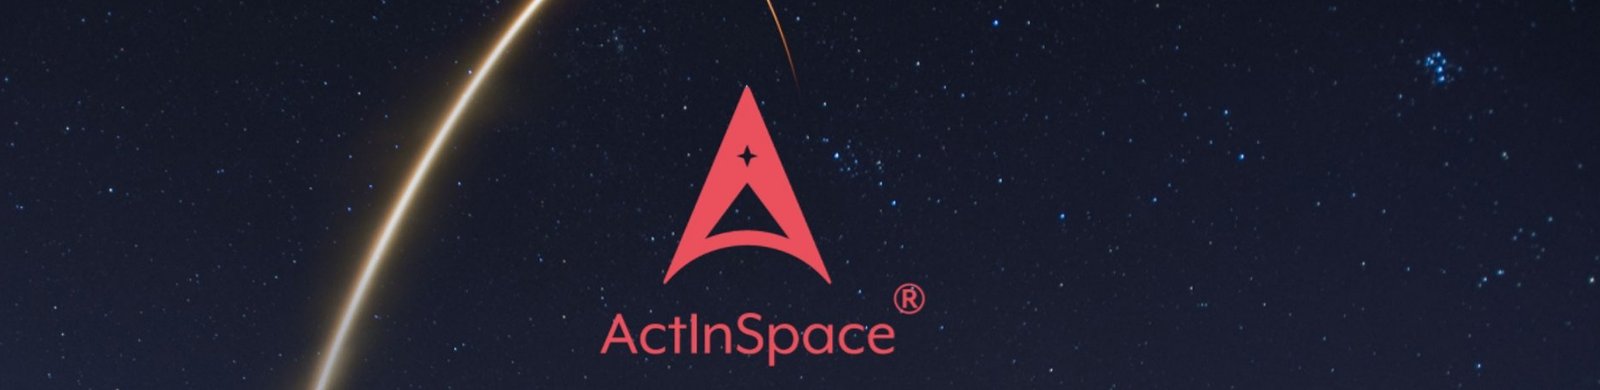 ActInSpace-logo-teaser.jpg